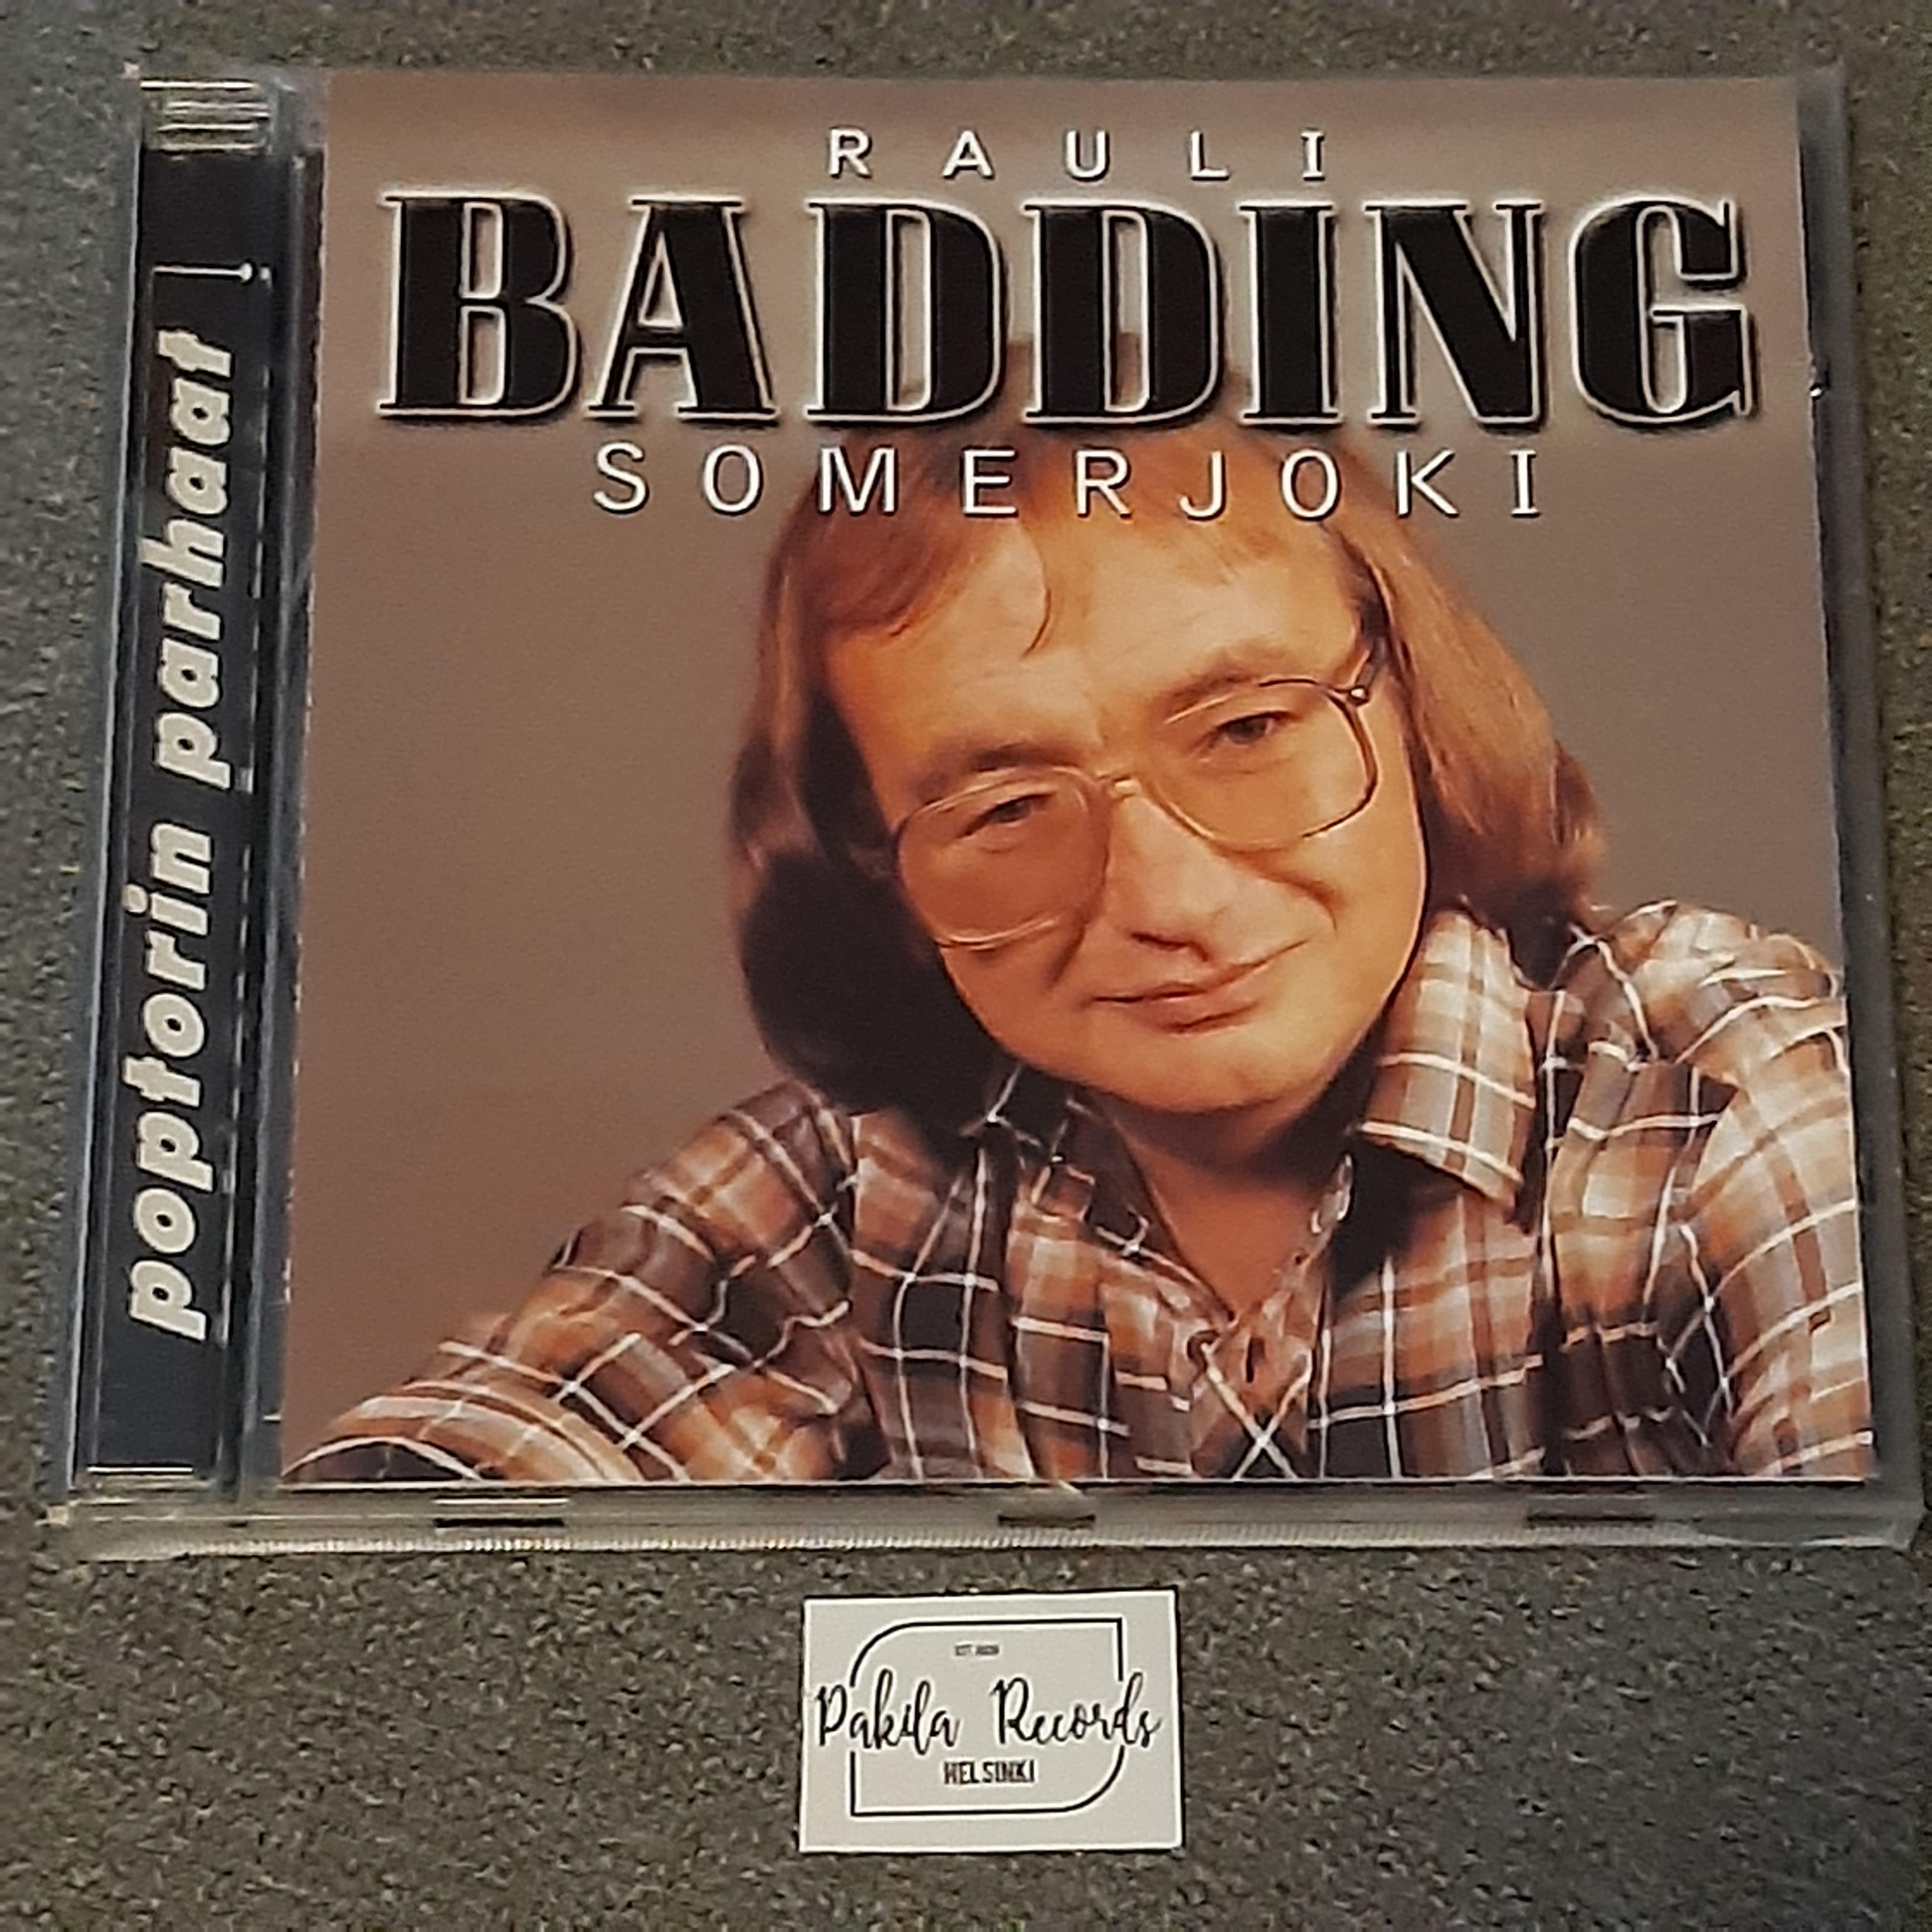 Rauli Badding Somerjoki - Bussi Somerolle - CD (käytetty)